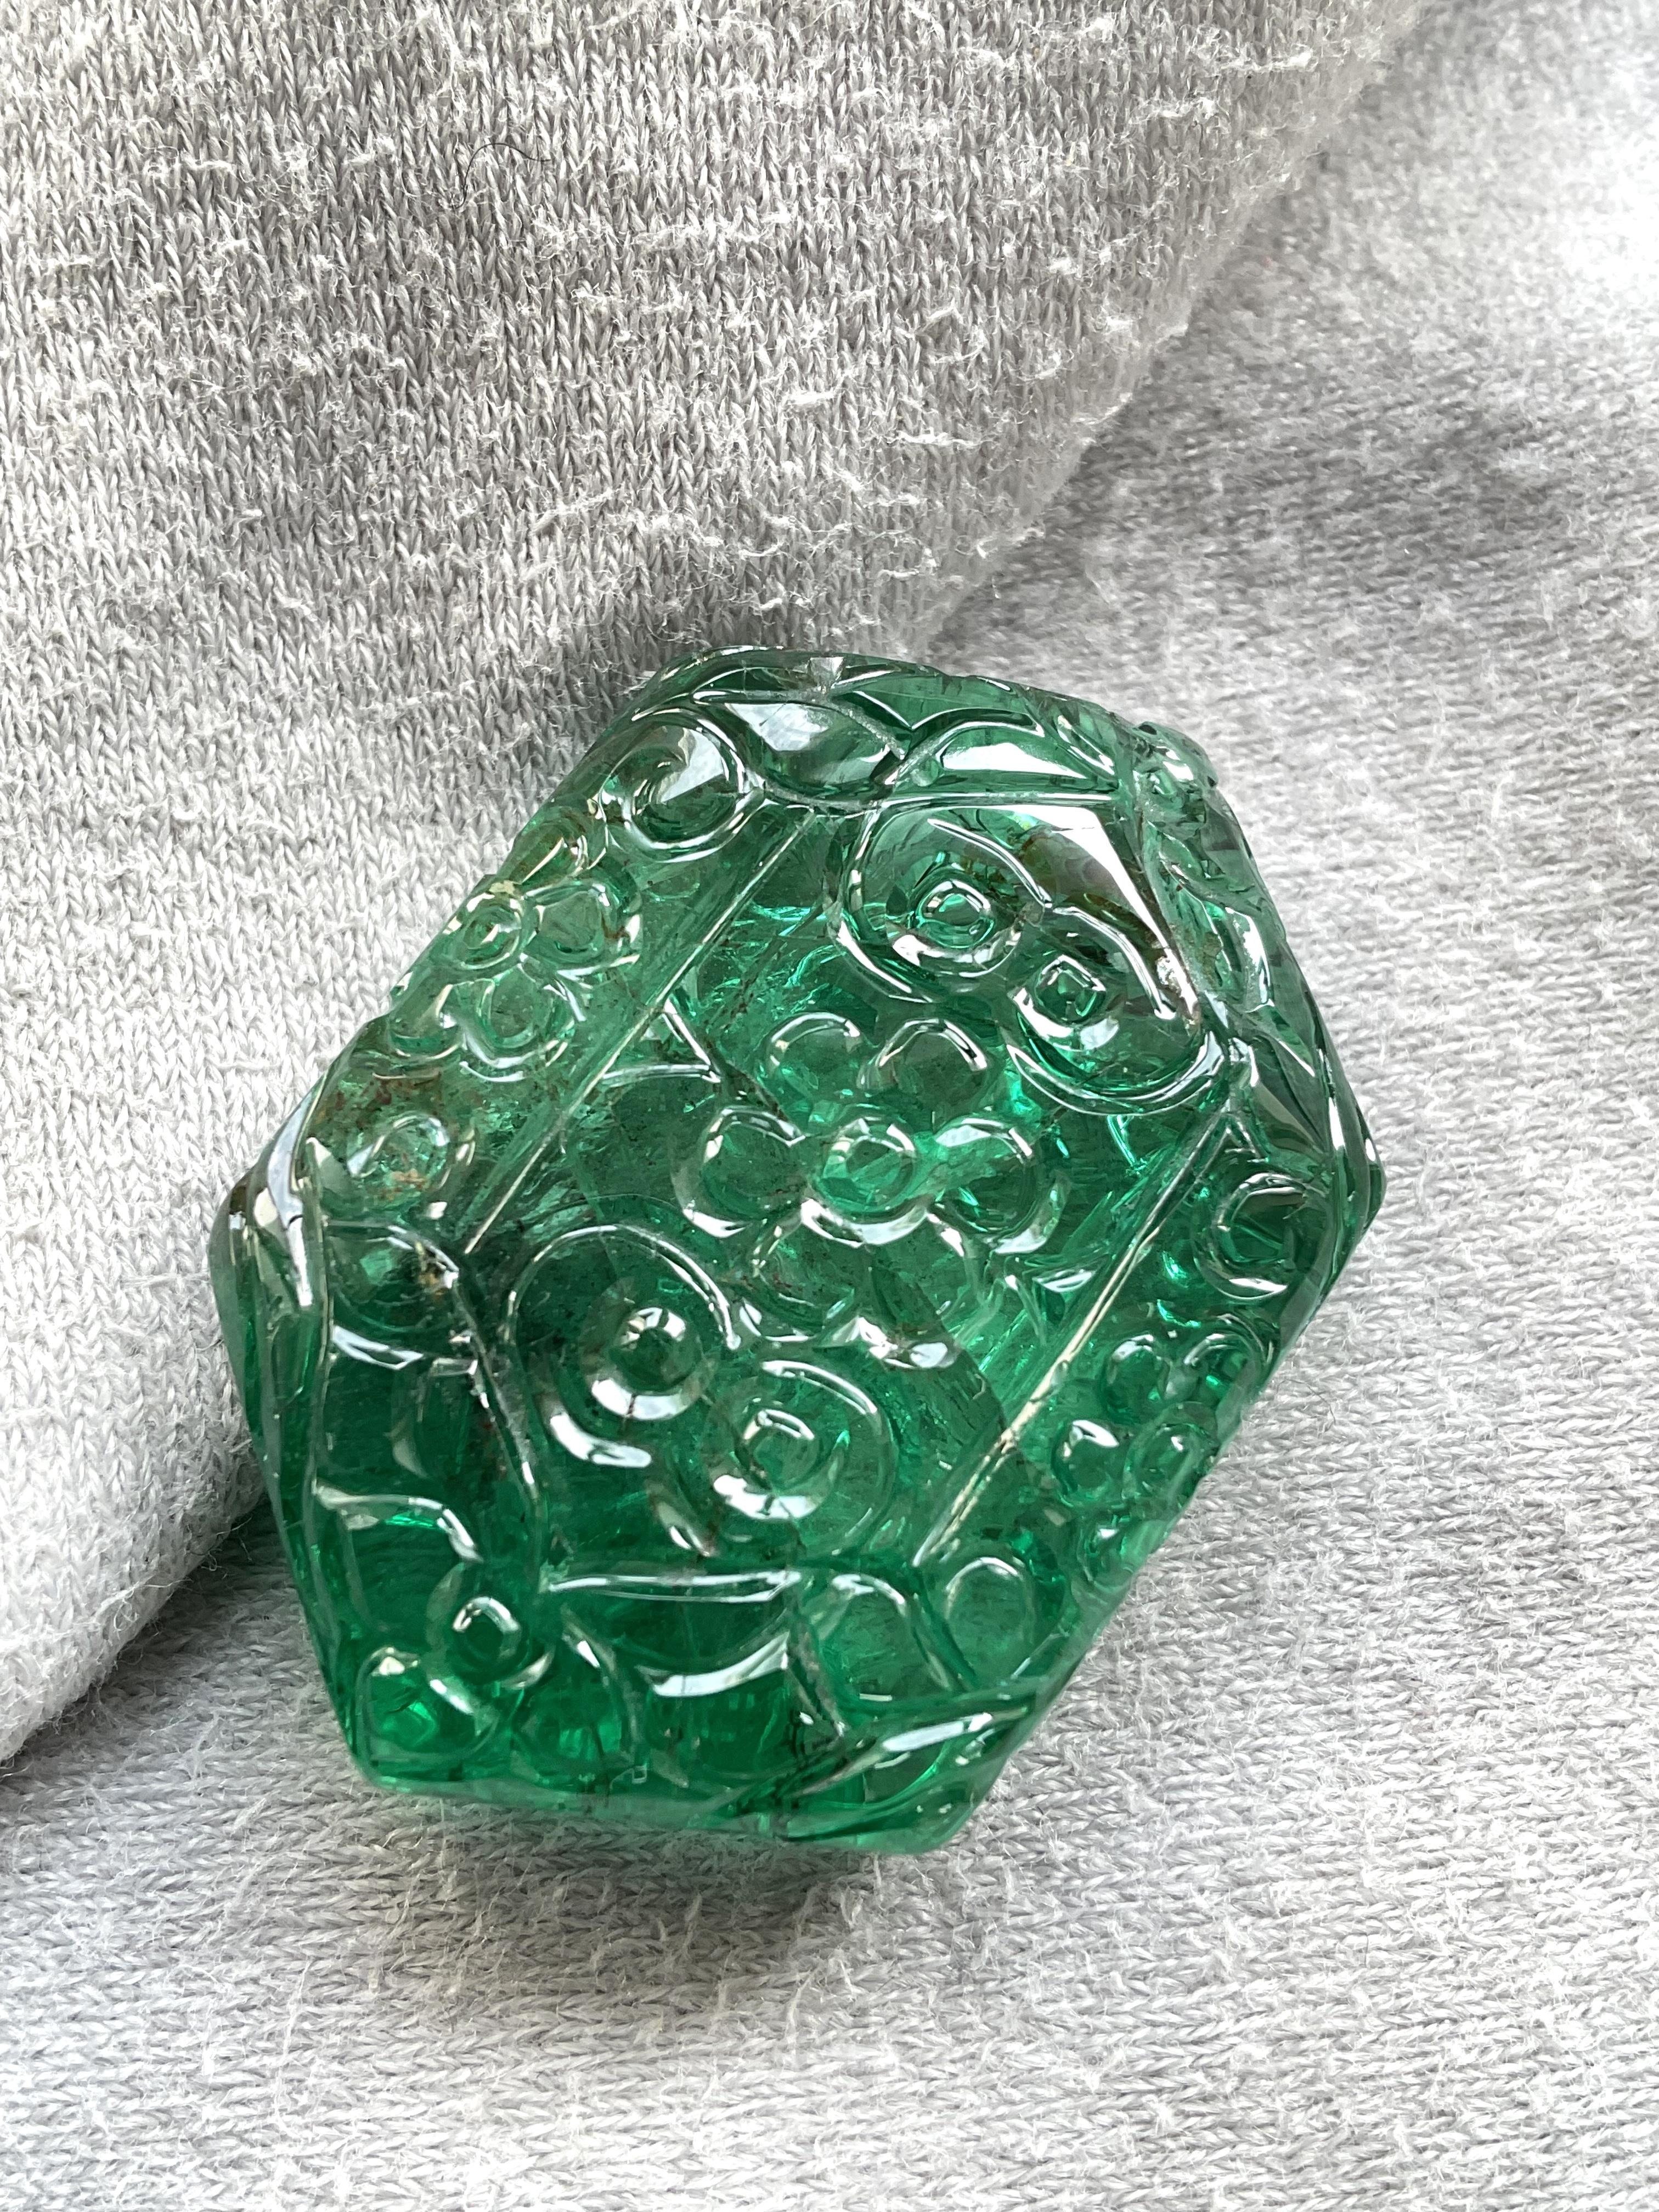 Hexagon Cut Zambian Emerald Hexagon Carved Gem Quality High Jewelry Gemstone 83.3 Carats For Sale